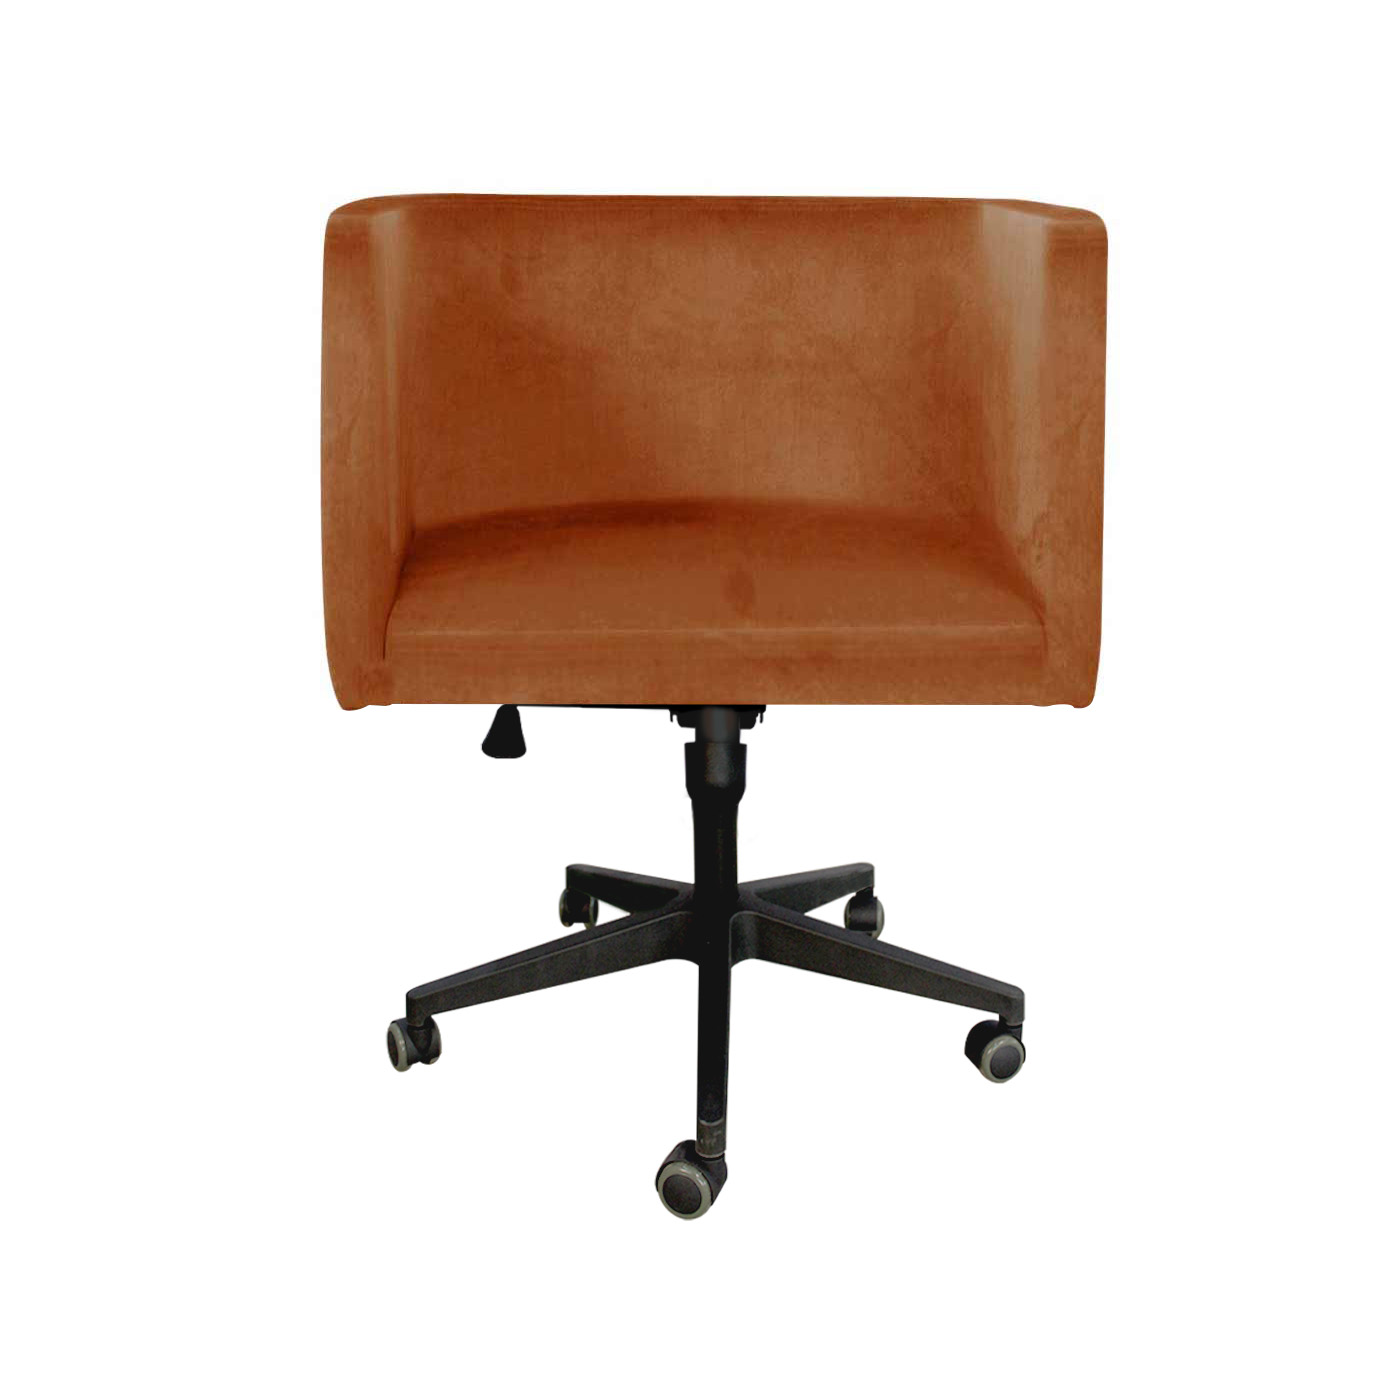 Dalian Orange Office Chair